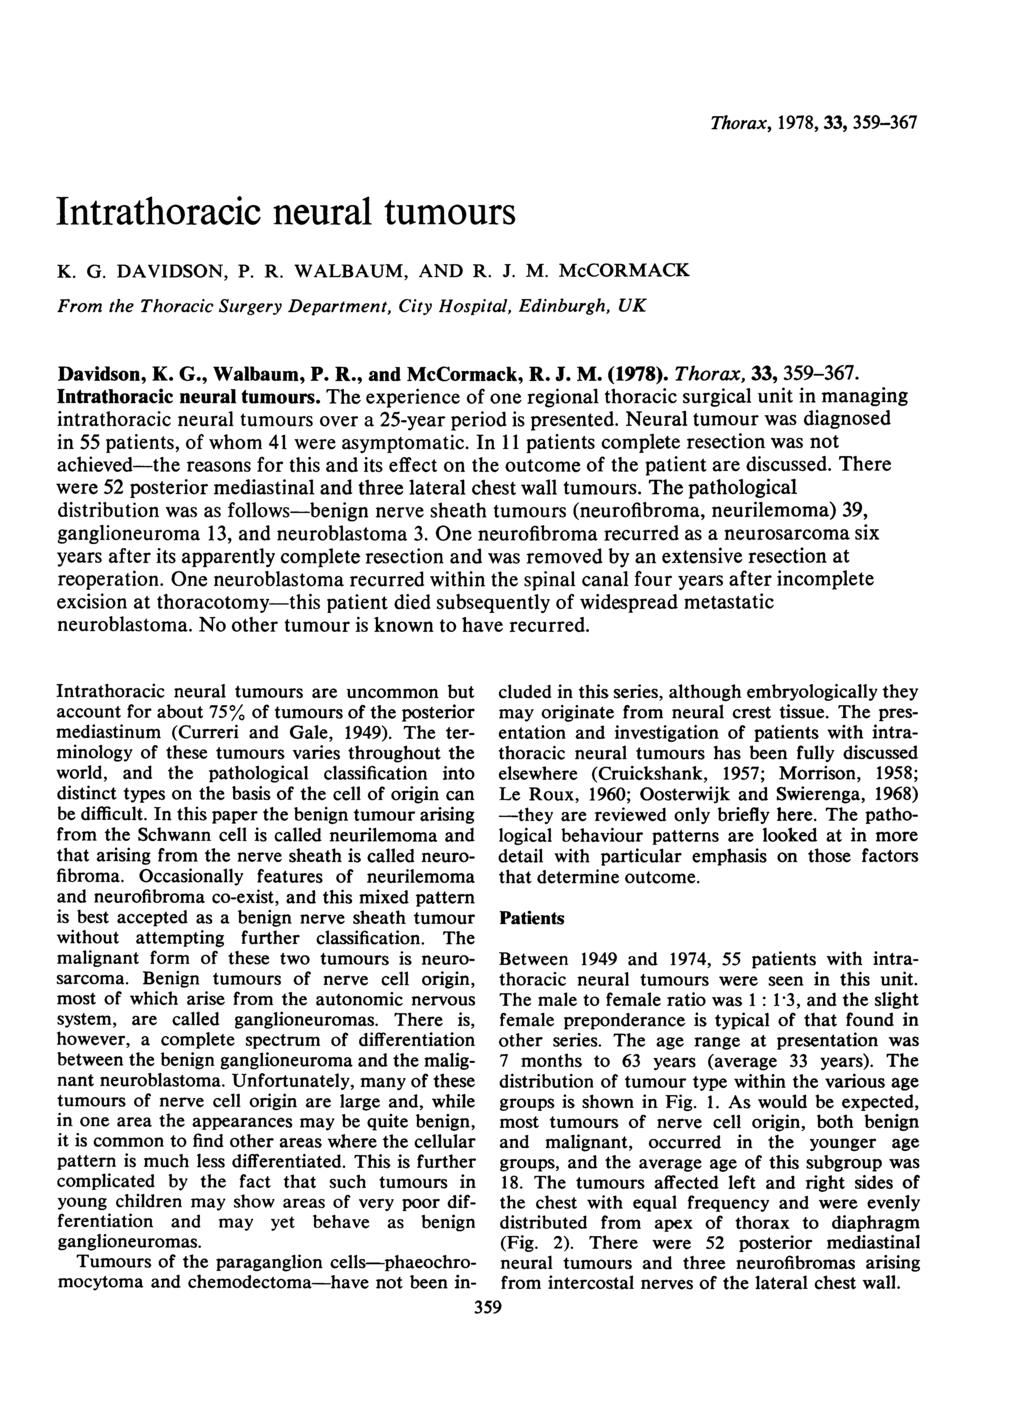 Intrathoracic neural tumours K. G. DAVIDSON, P. R. WALBAUM, AND R. J. M. McCORMACK From the Thoracic Surgery Department, City Hospital, Edinburgh, UK Thorax, 1978, 33, 359-367 Davidson, K. G., Walbaum, P.